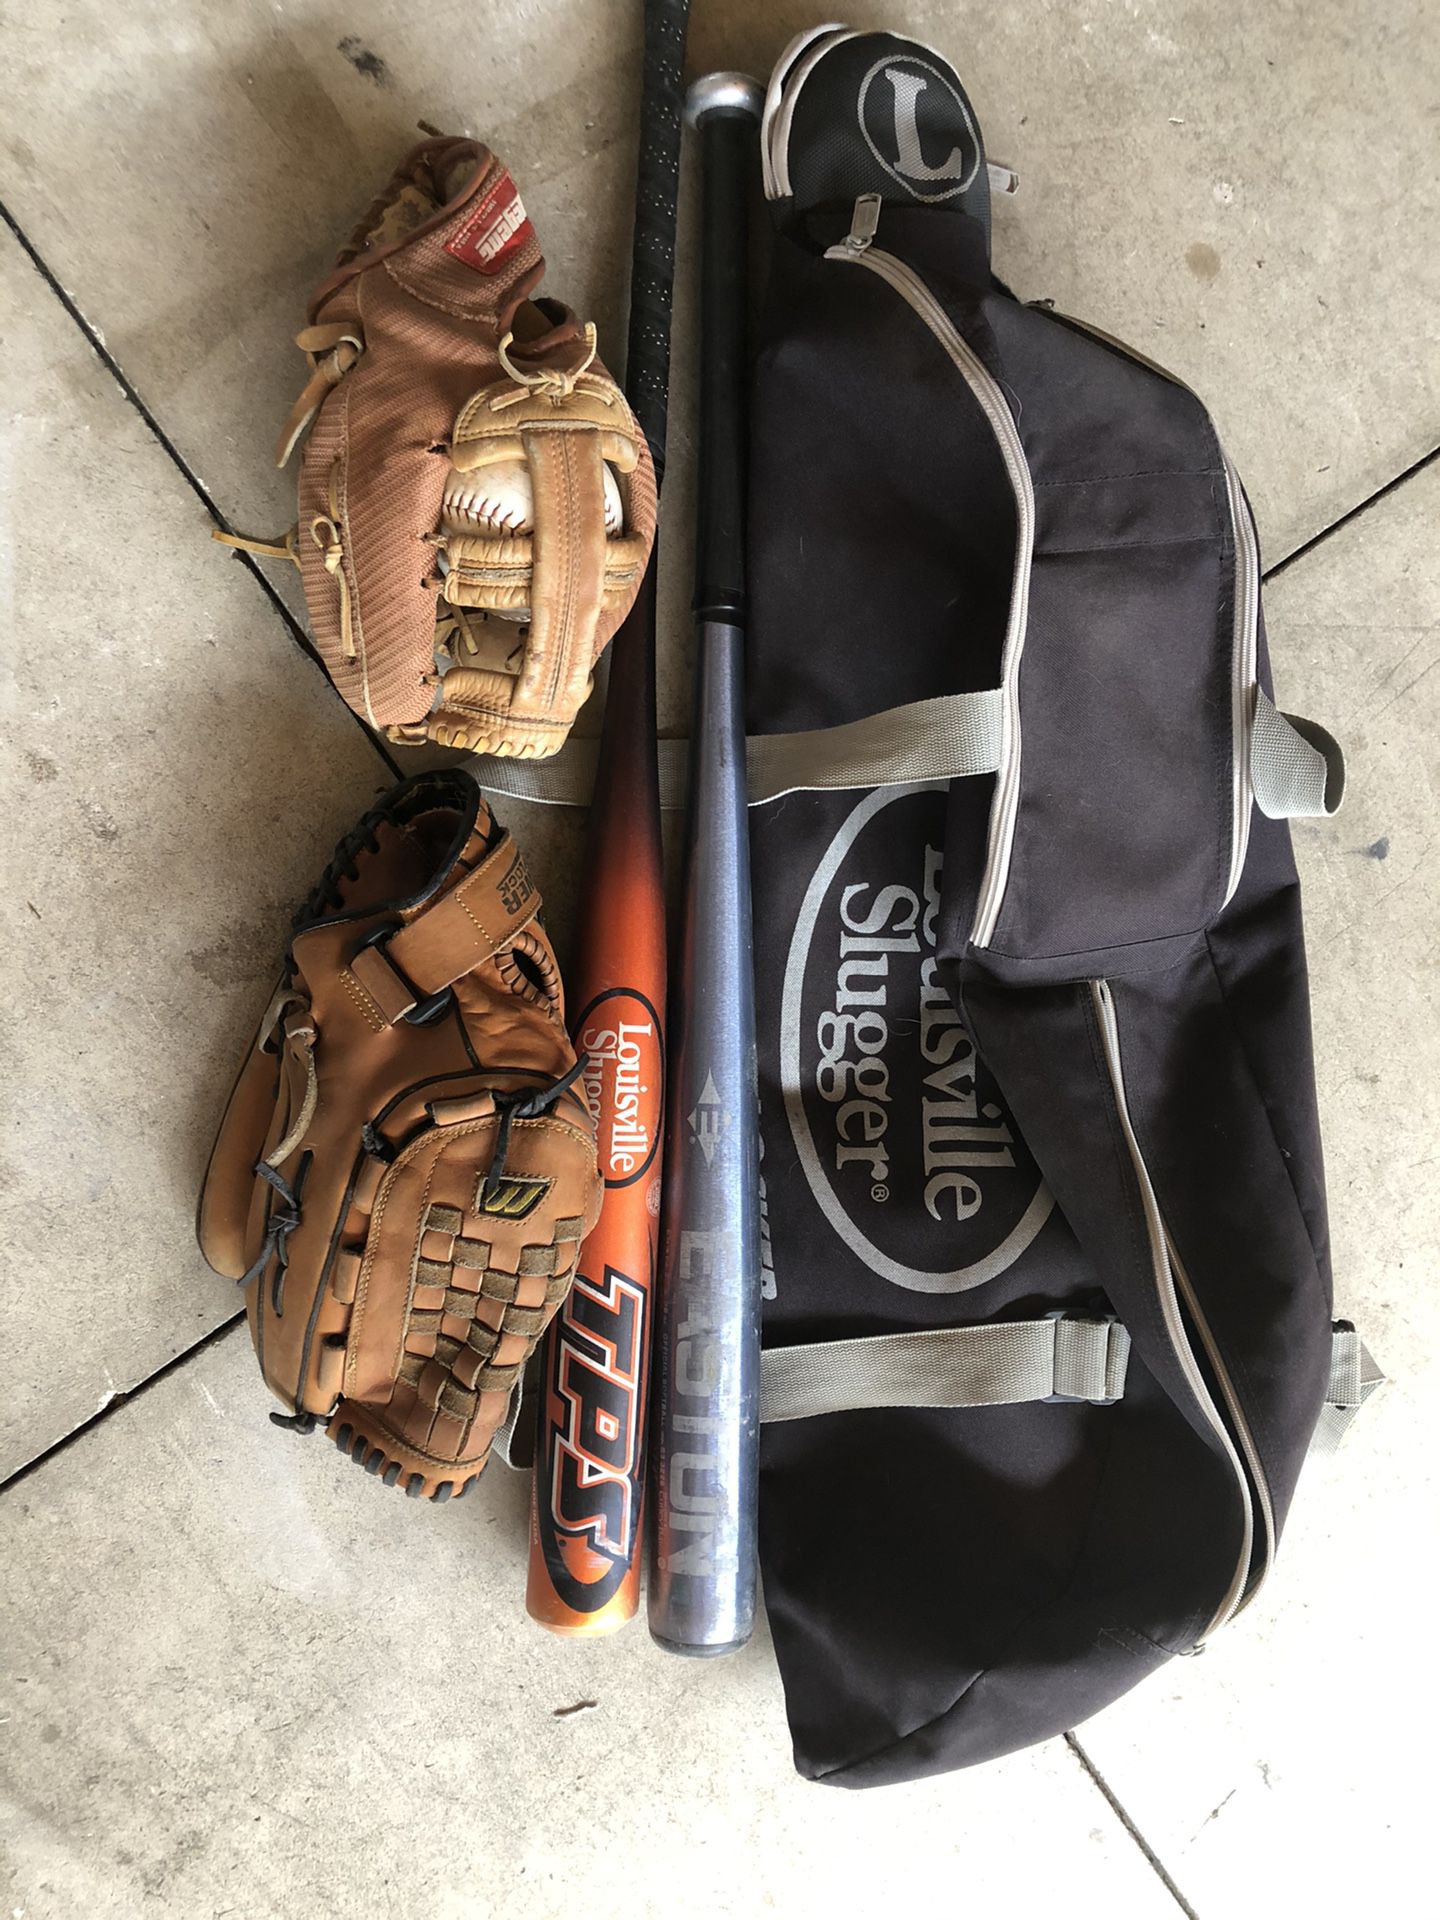 Softball bats and gloves